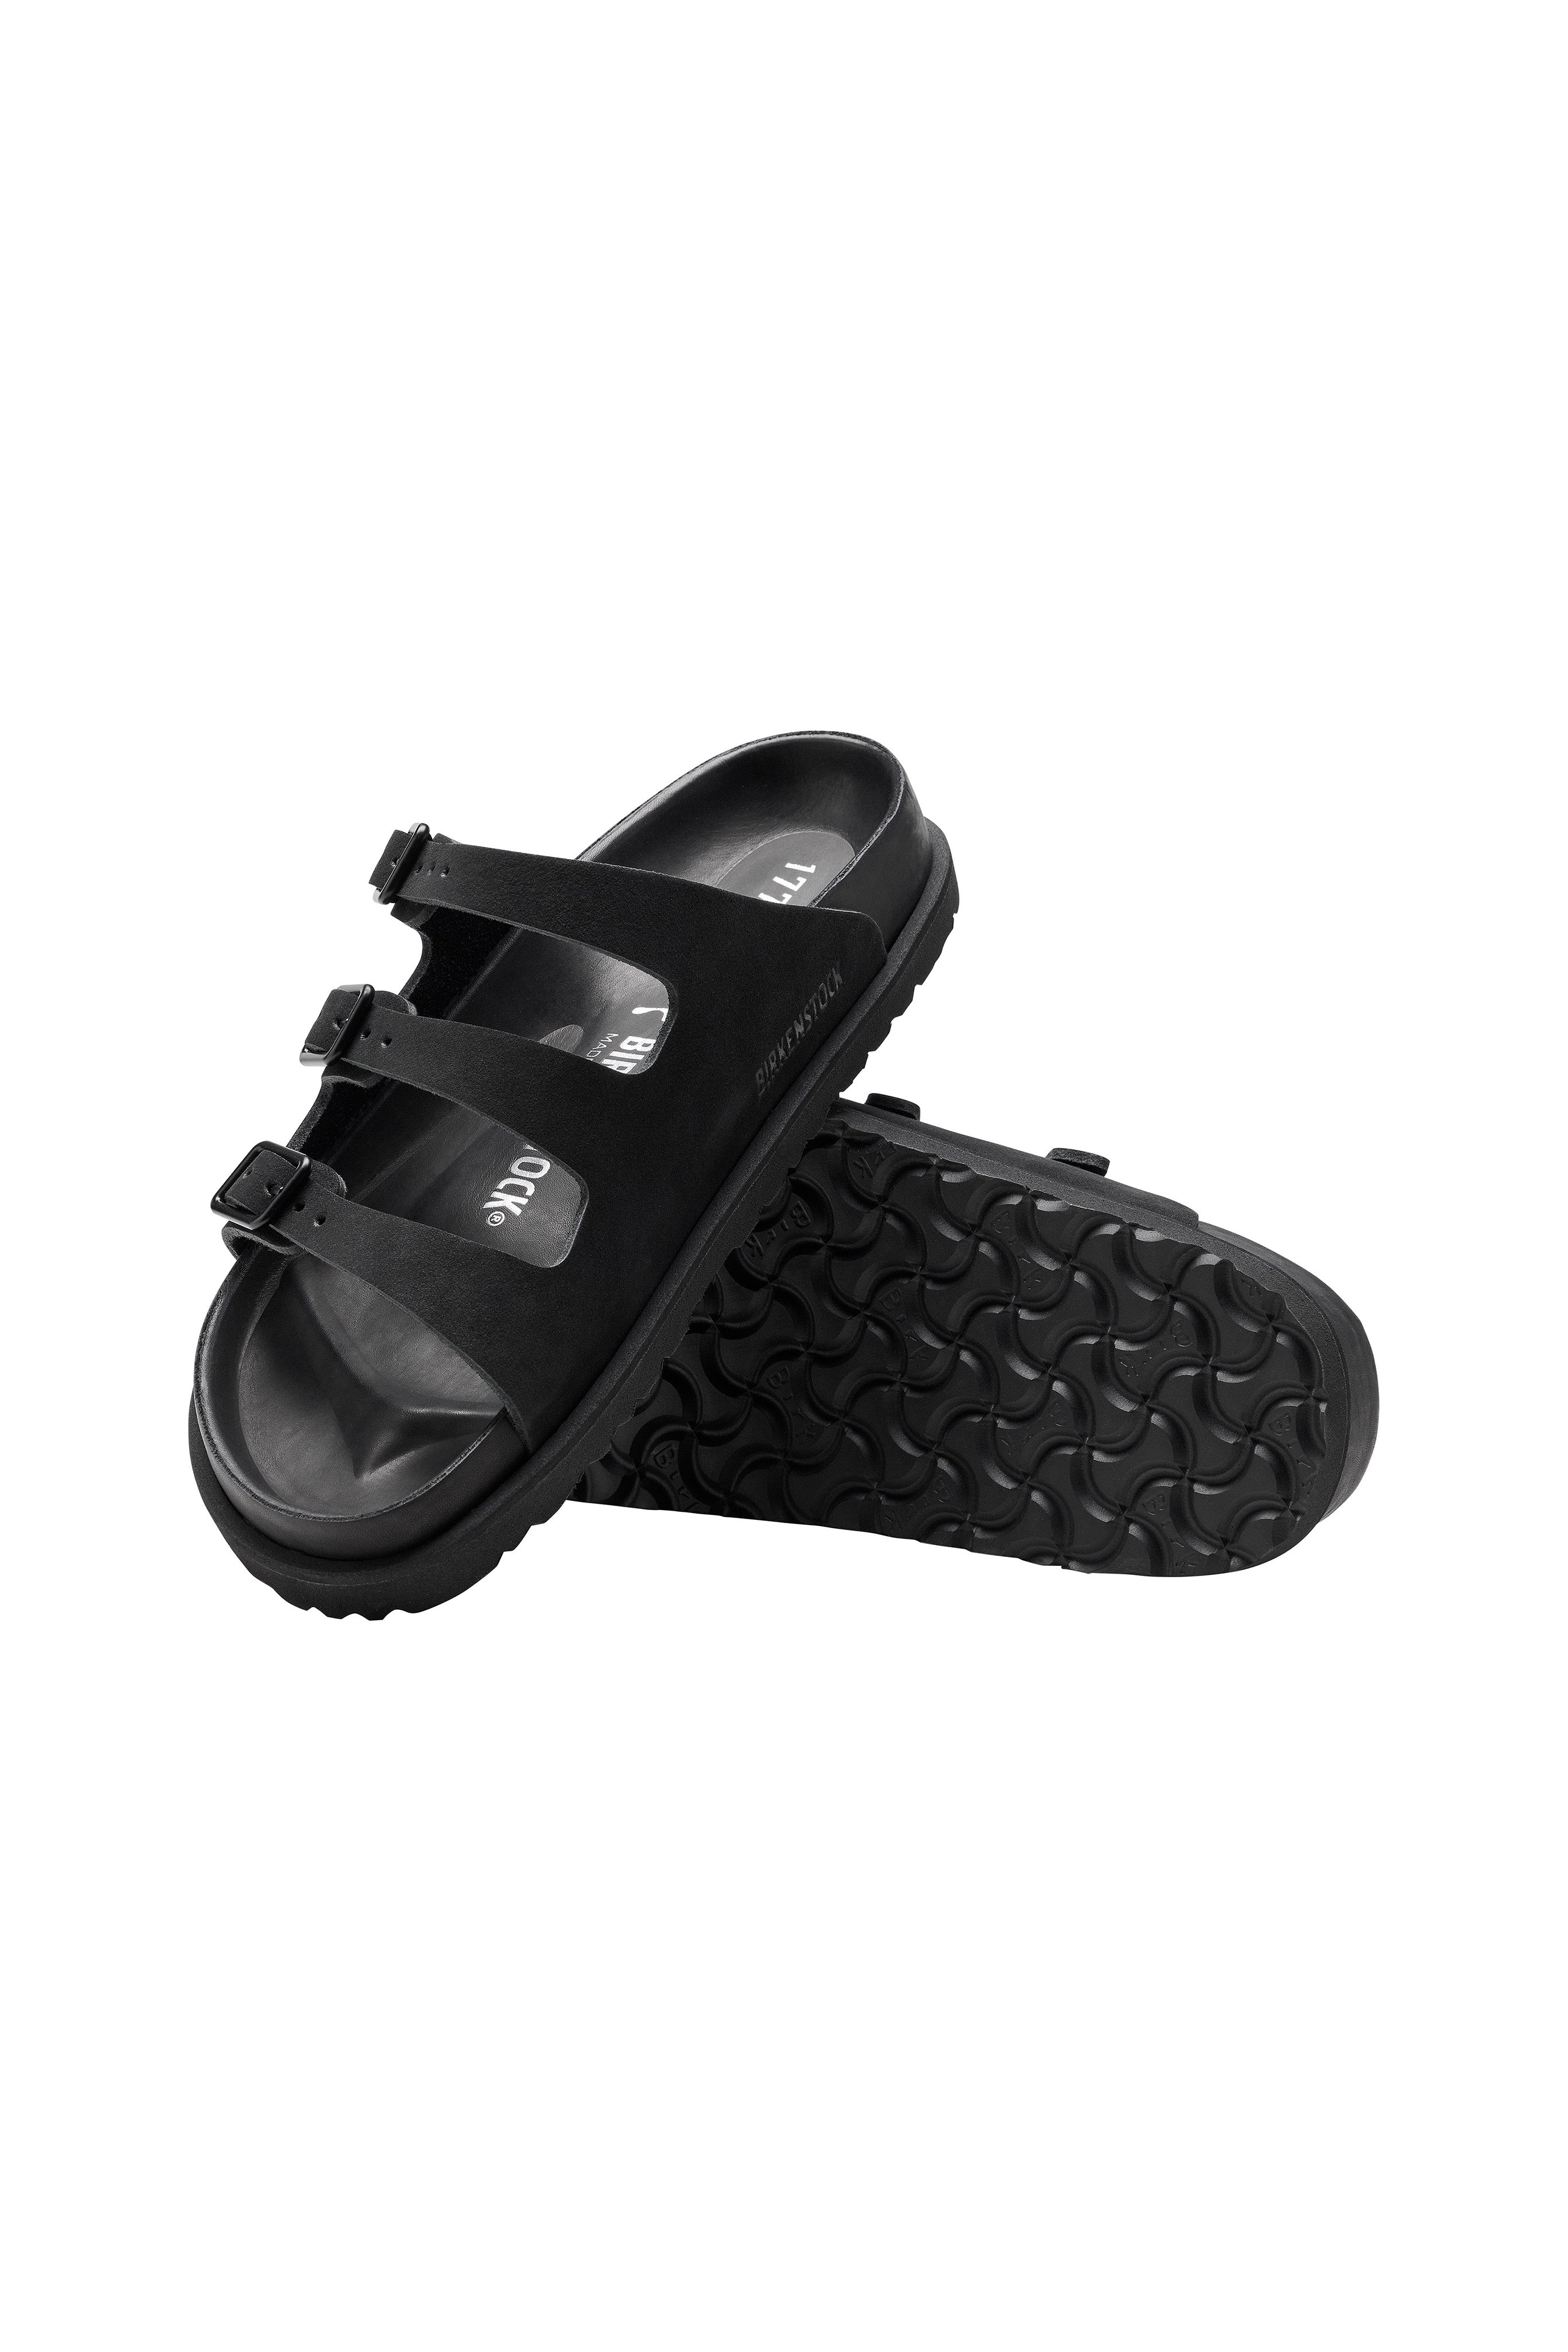 Florida Black Suede Sandals